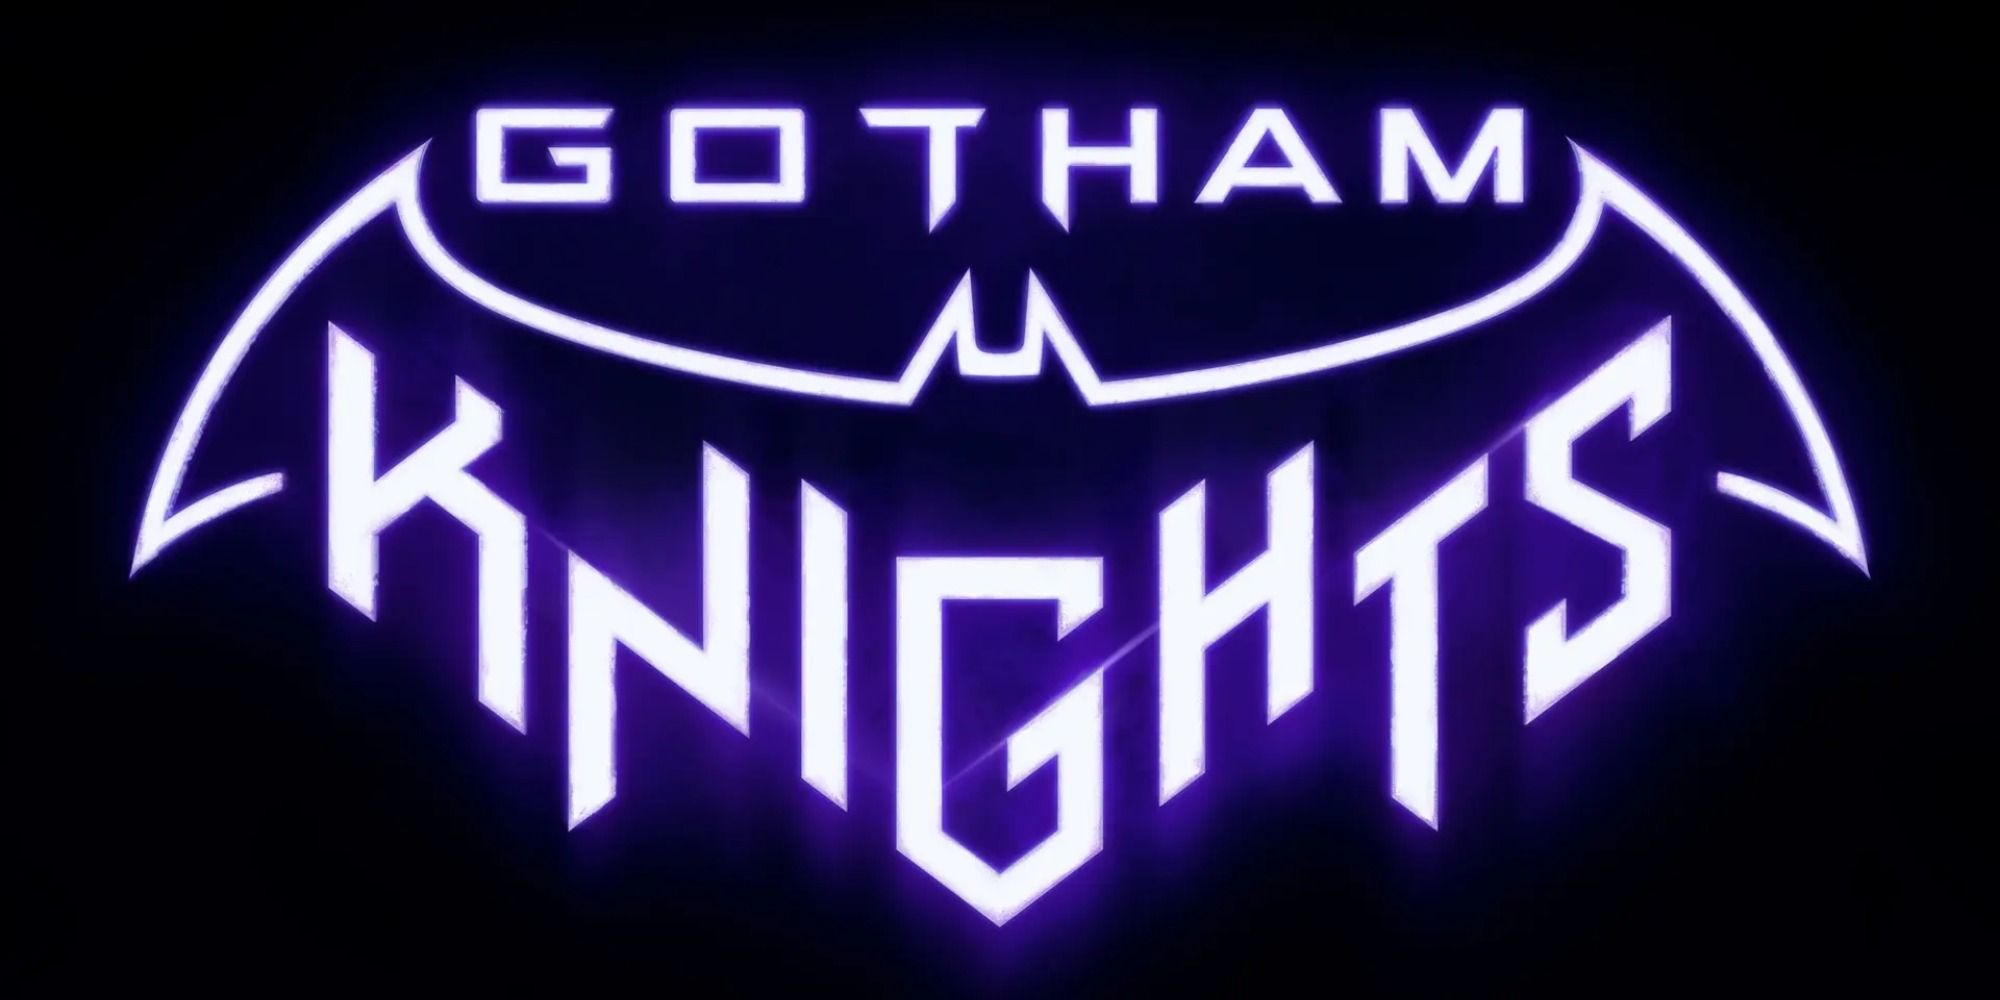 Gotham Knights Debuts Game's Discord Server CBR